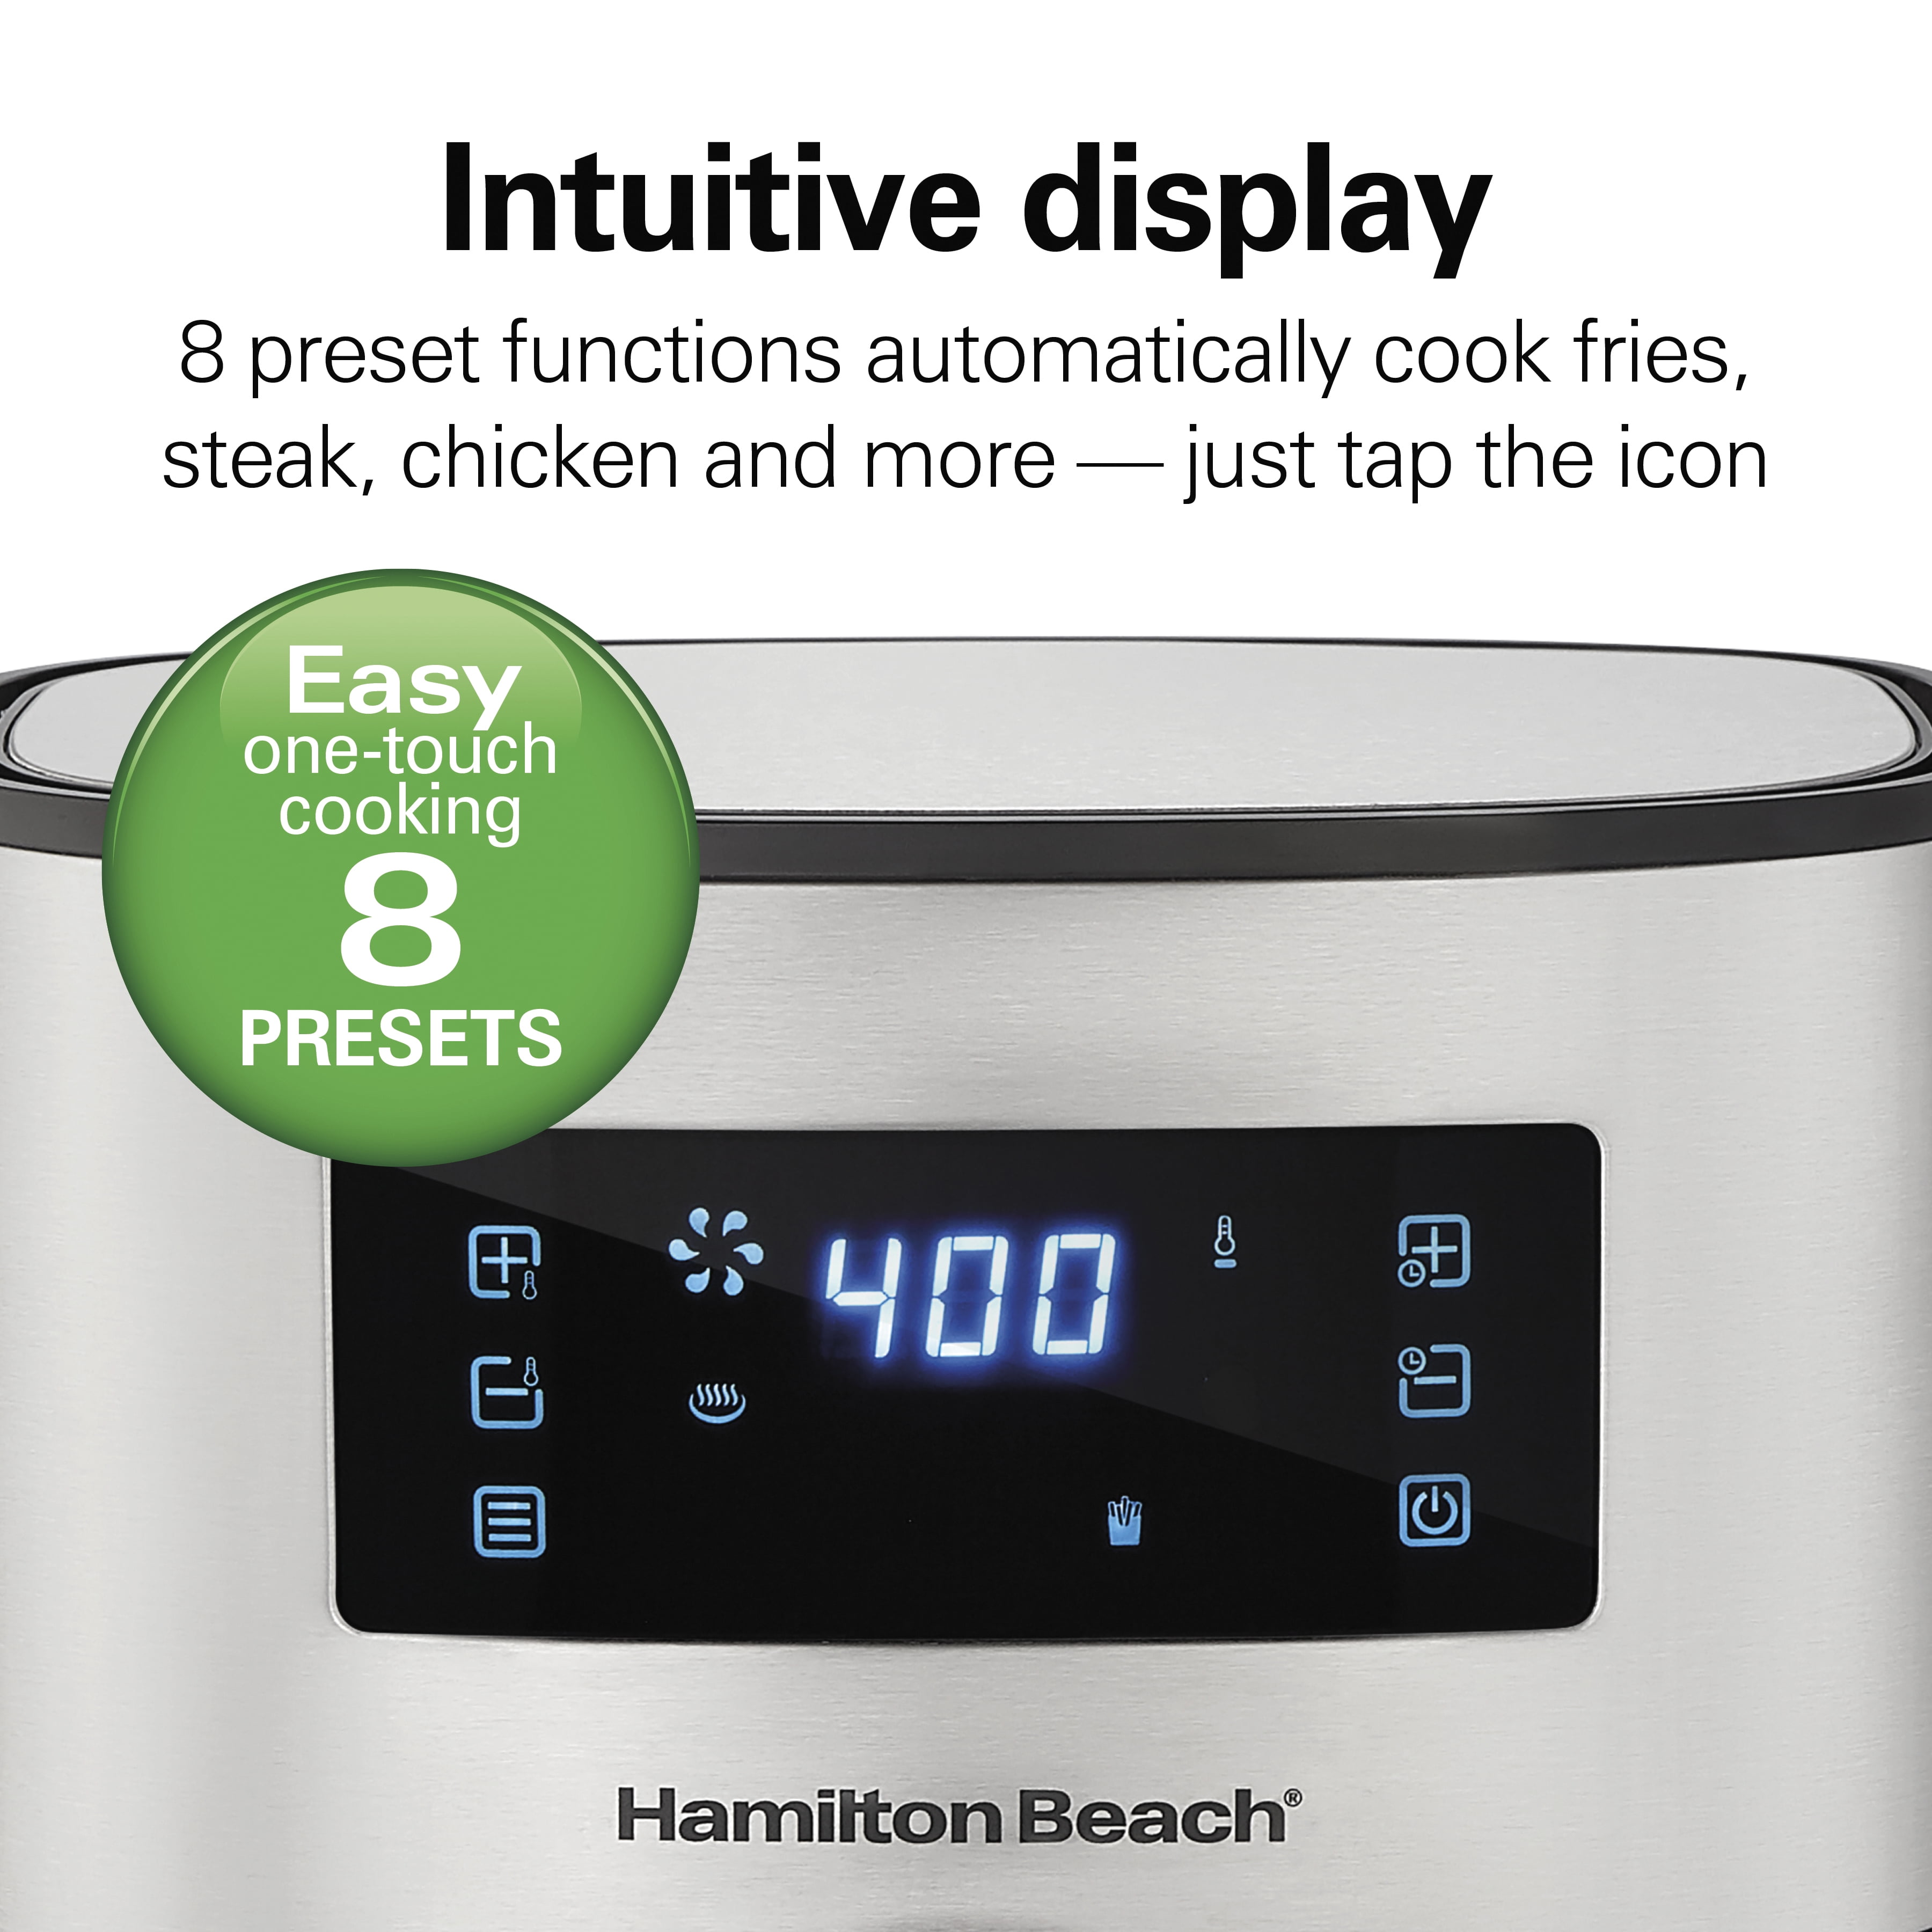 Hamilton Beach 35051 Digital Air Fryer, Large 2.5 Liter Capacity